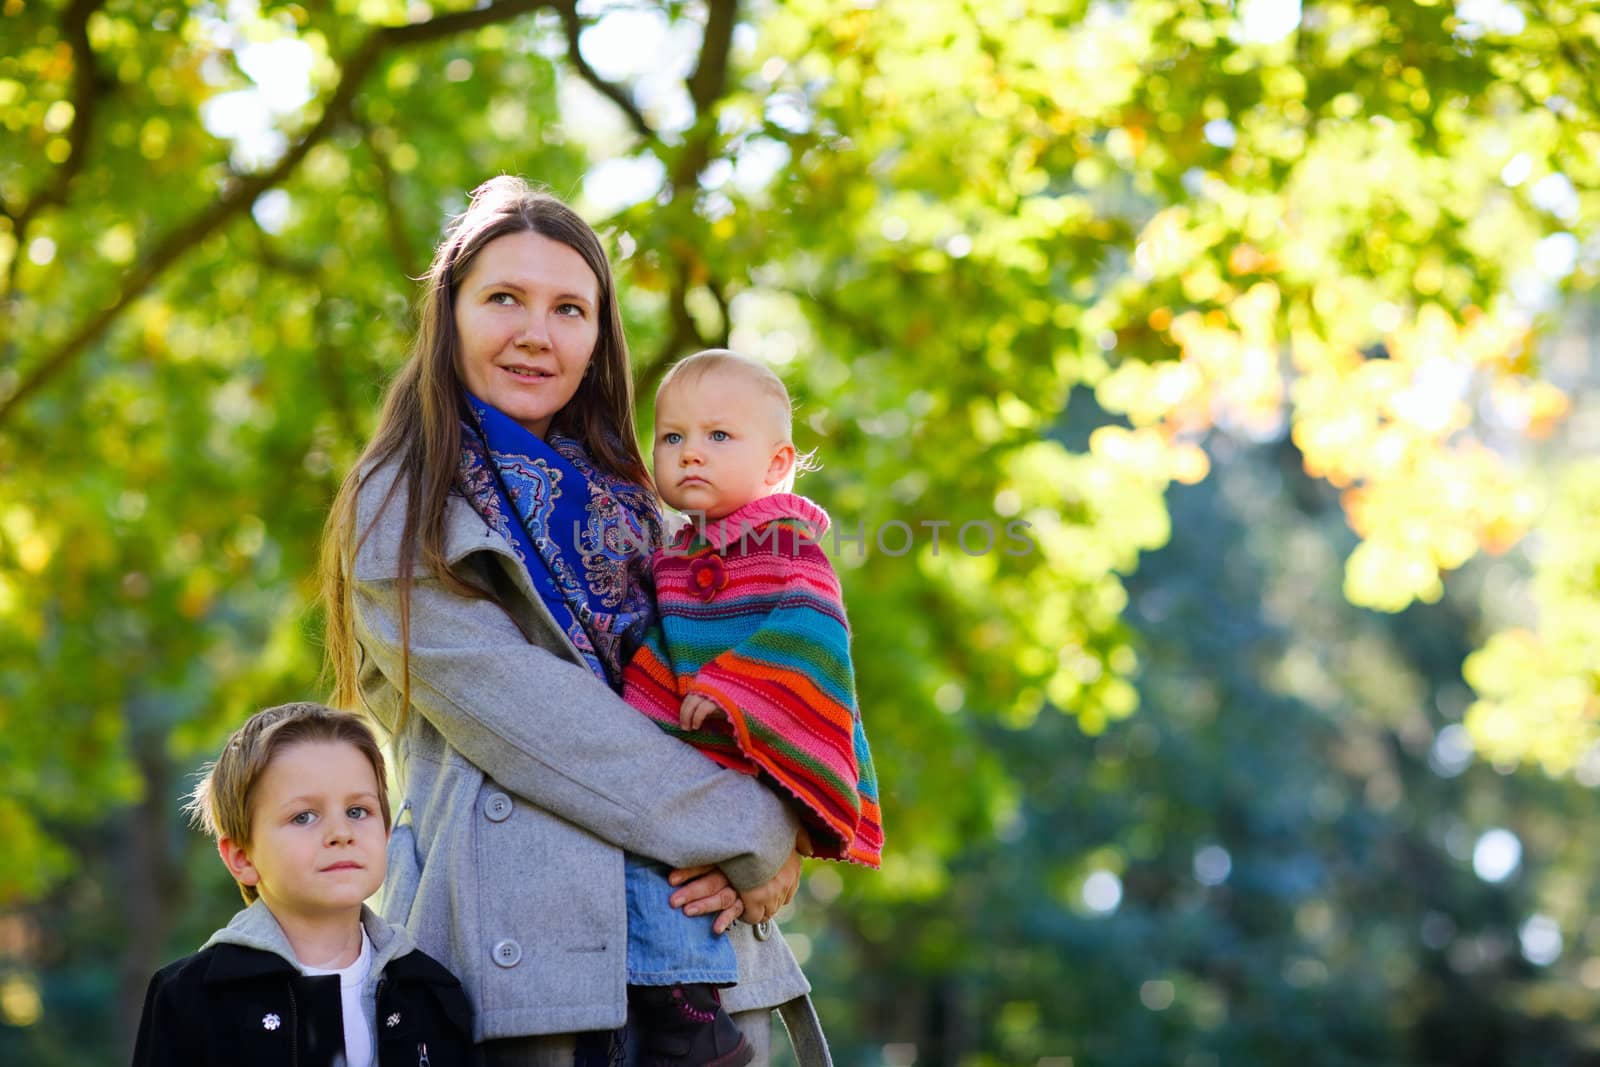 Autumn family by shalamov